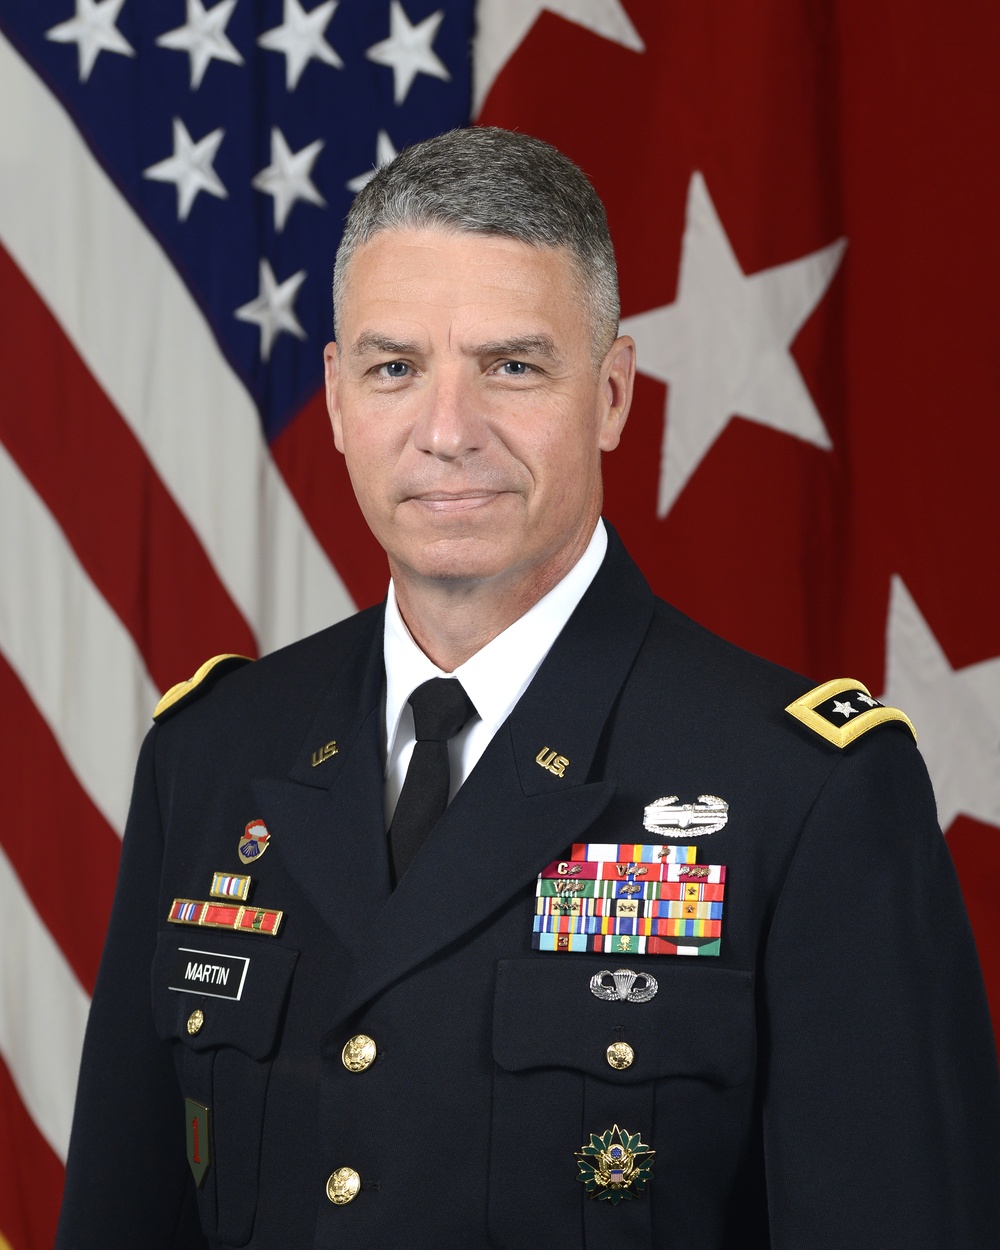 Lt. Gen. Joseph M. Martin